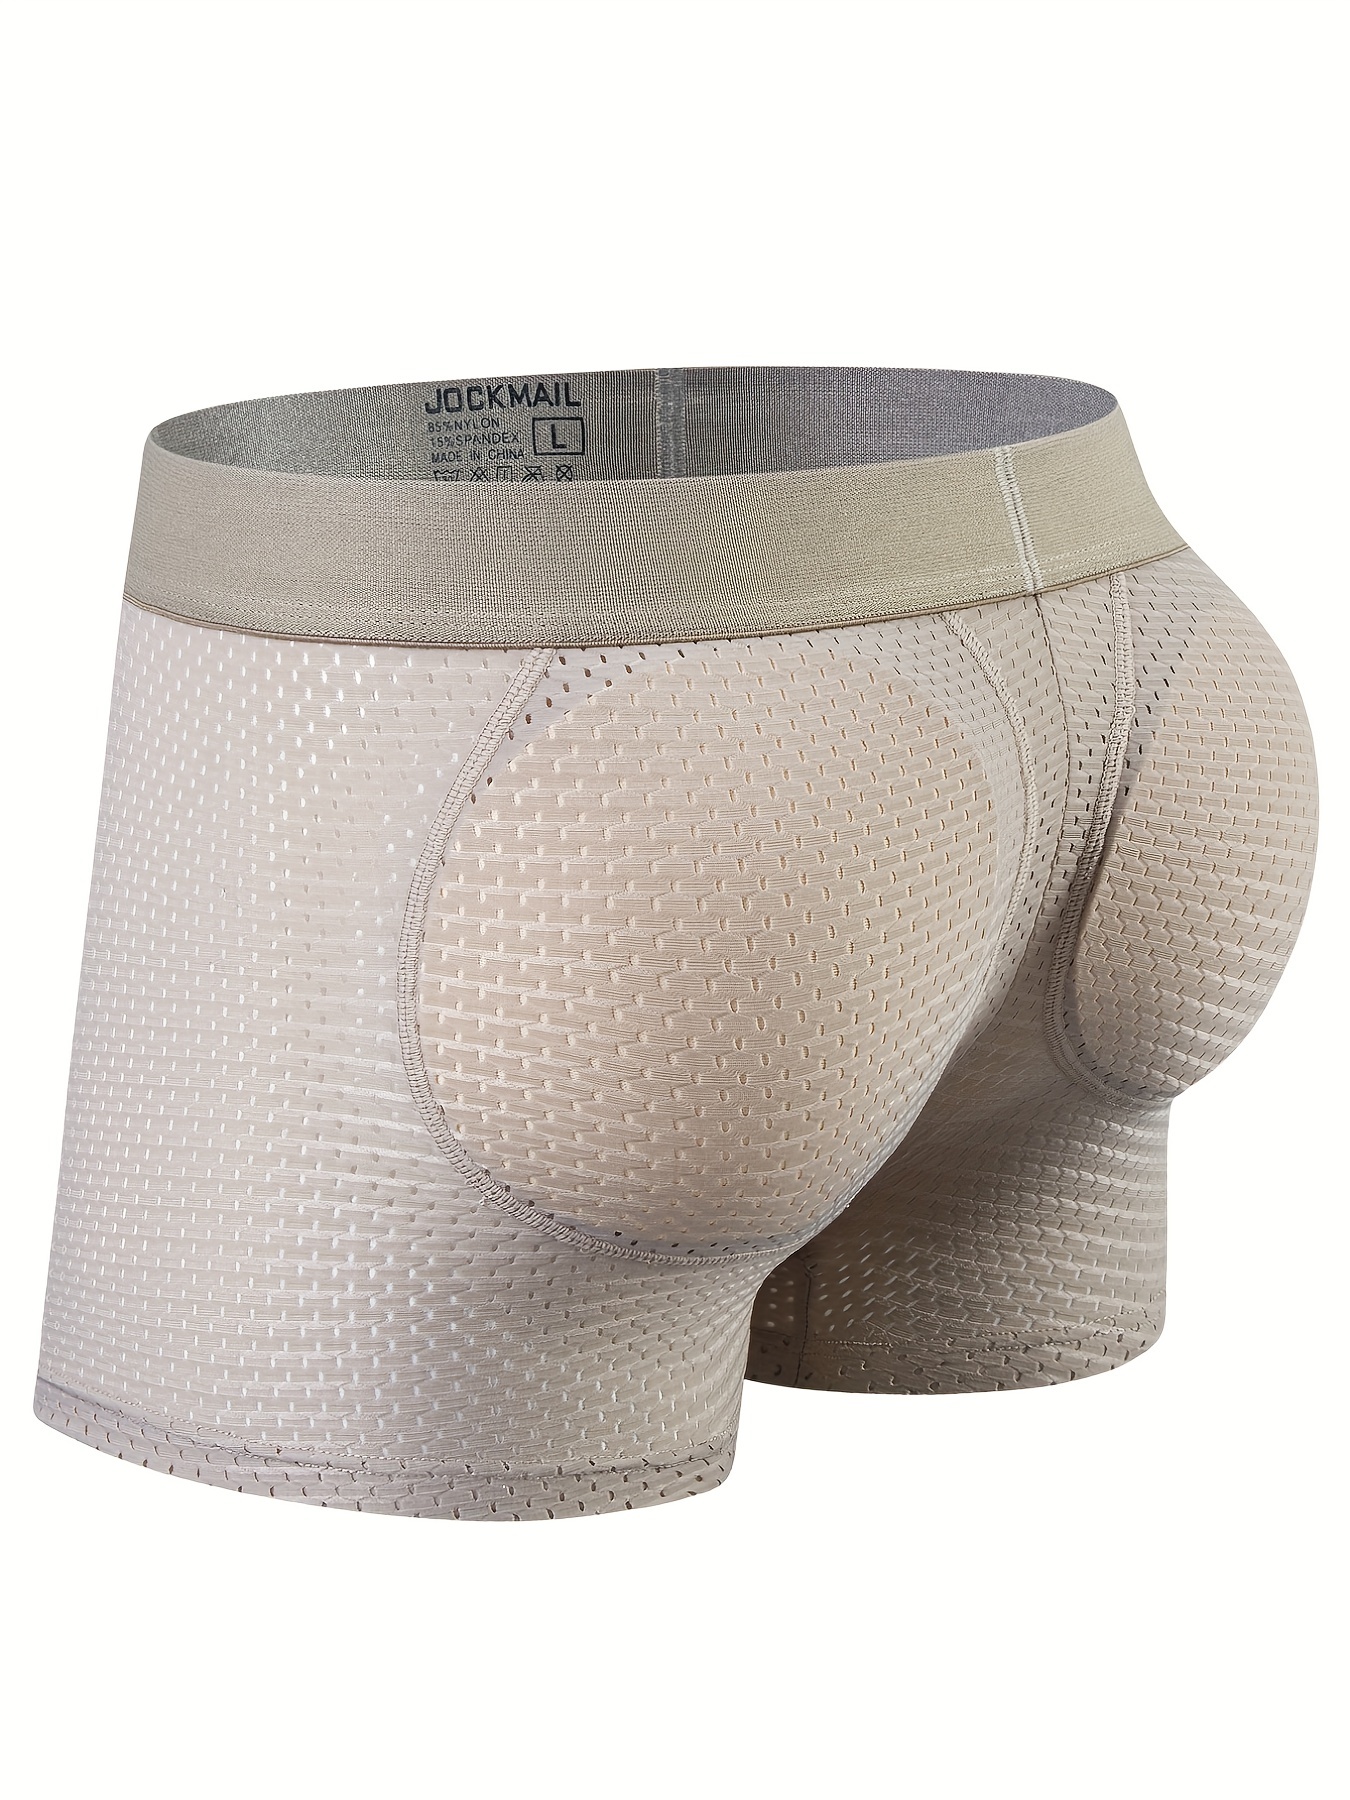 Soft padded underwear men For Comfort 